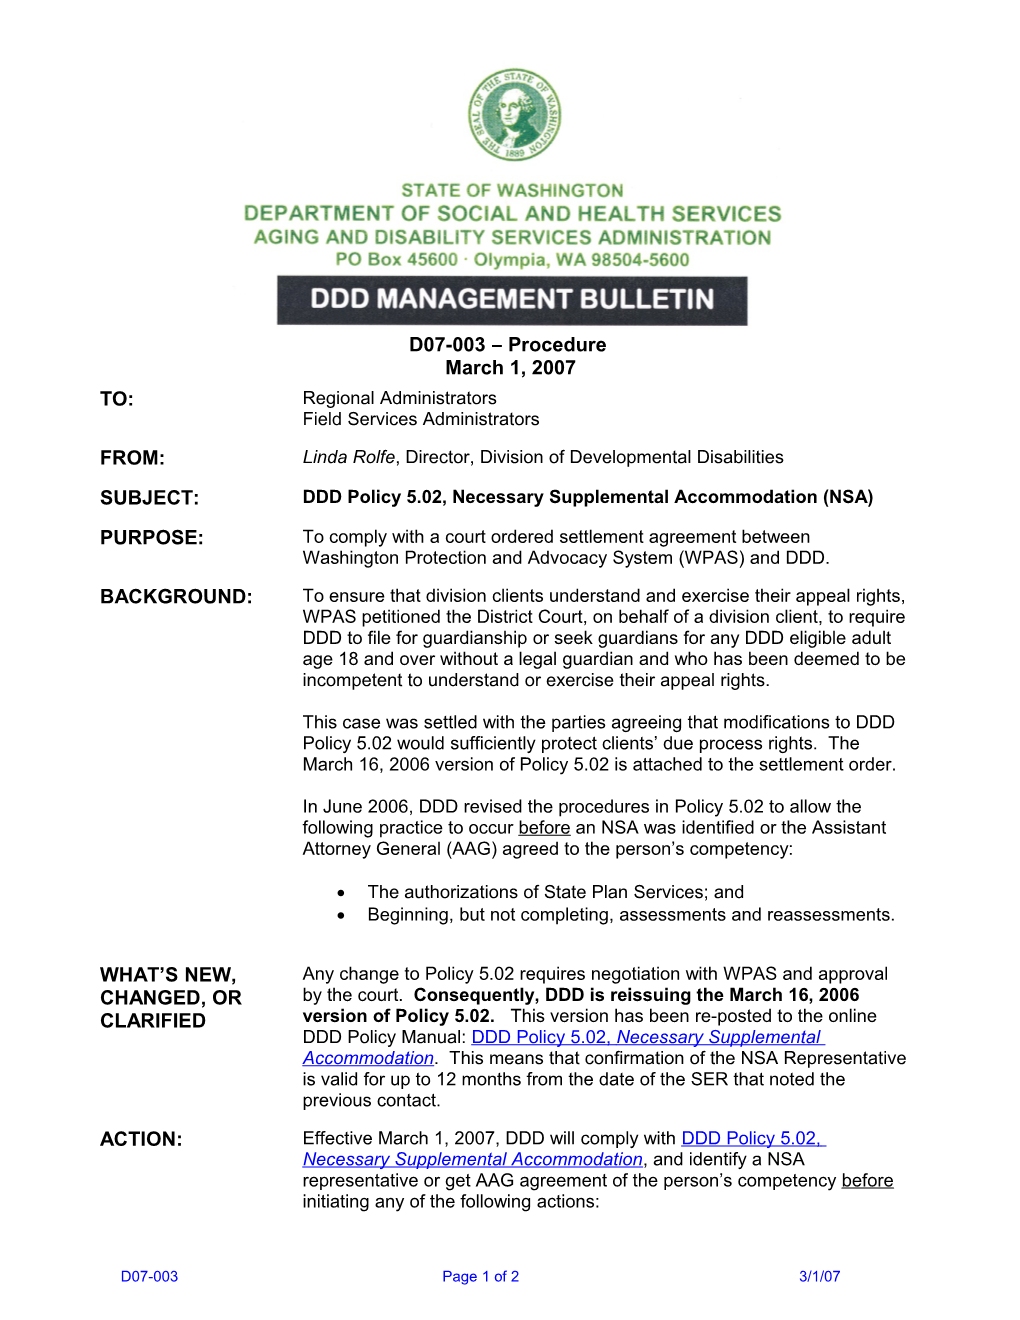 DDD Policy 5.02, Necessary Supplemental Accommodation (NSA)